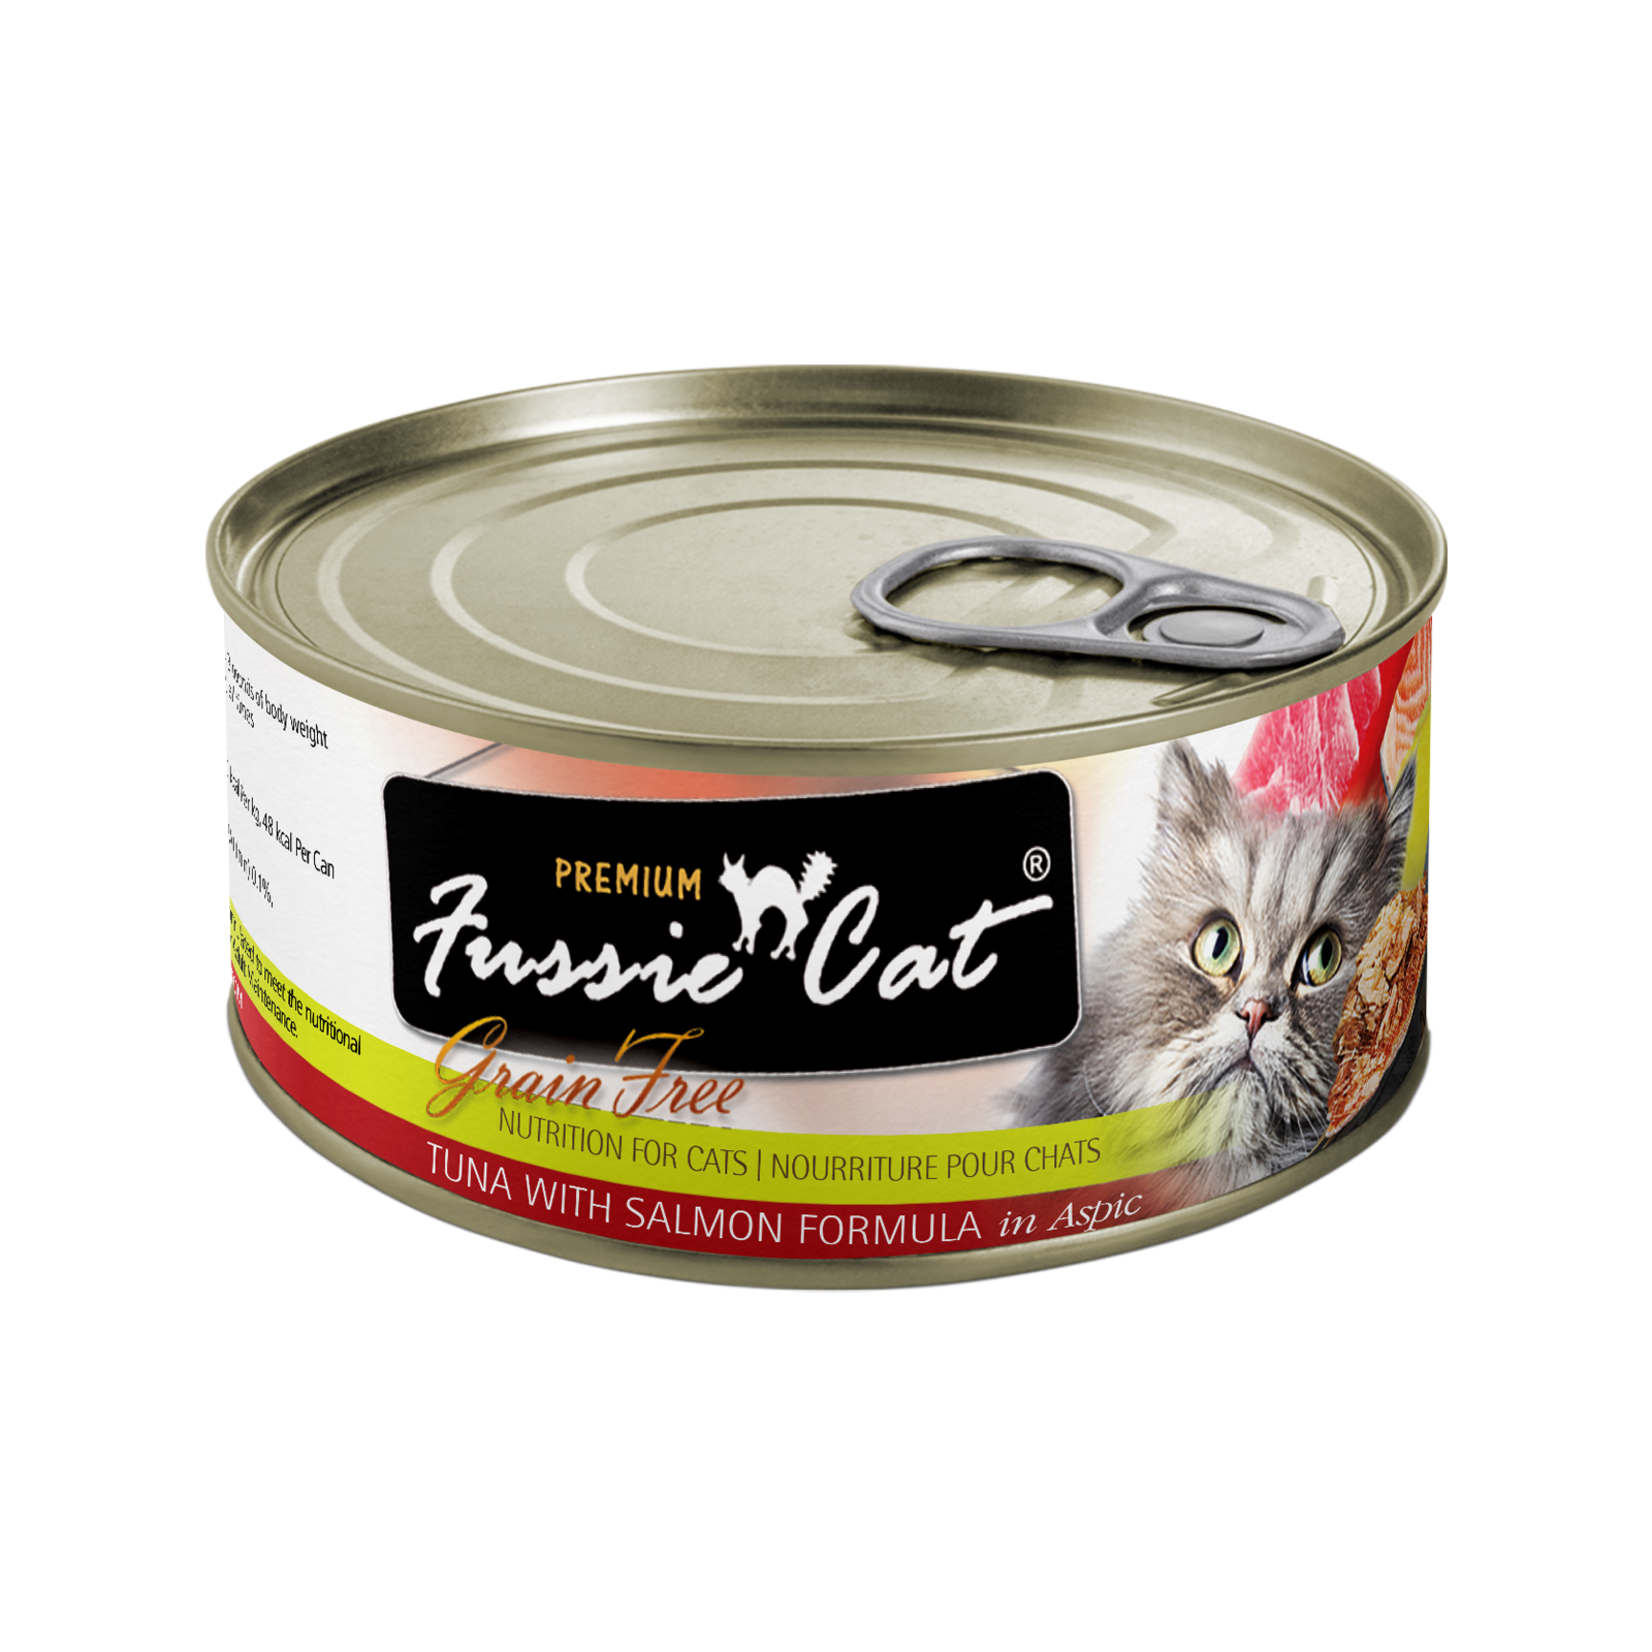 Fussie Cat Fussie Cat Premium - Grain Free Tuna with Salmon Formula in Aspic for Cats